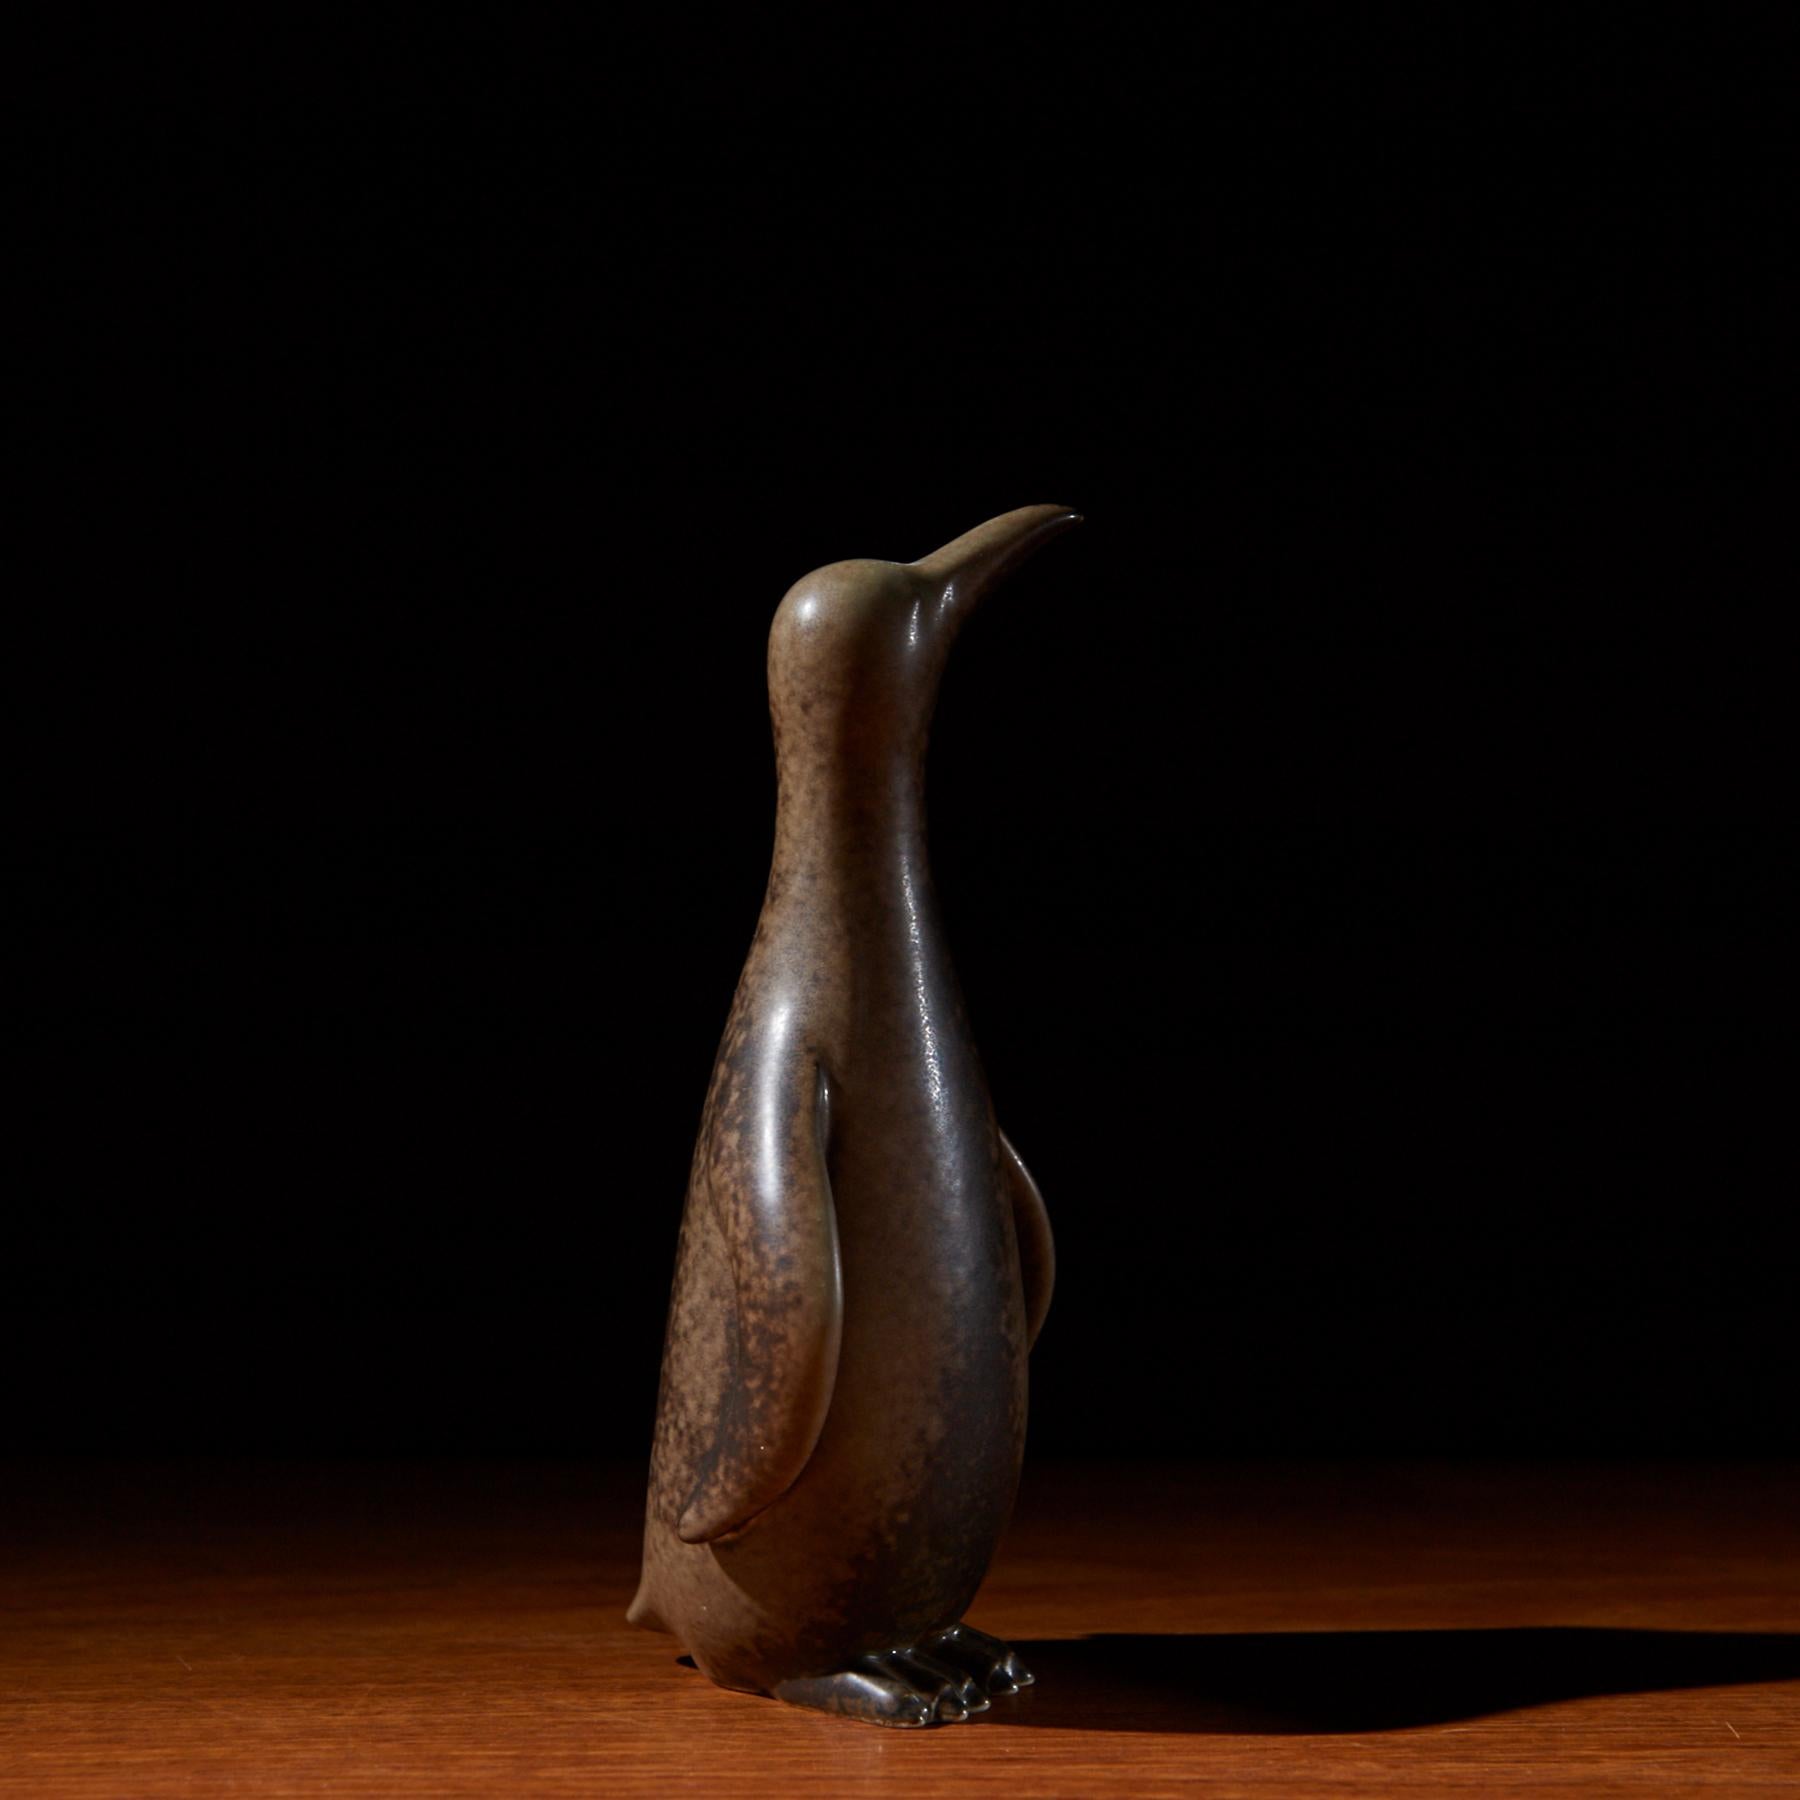 European Penguin by Gunnar Nylund